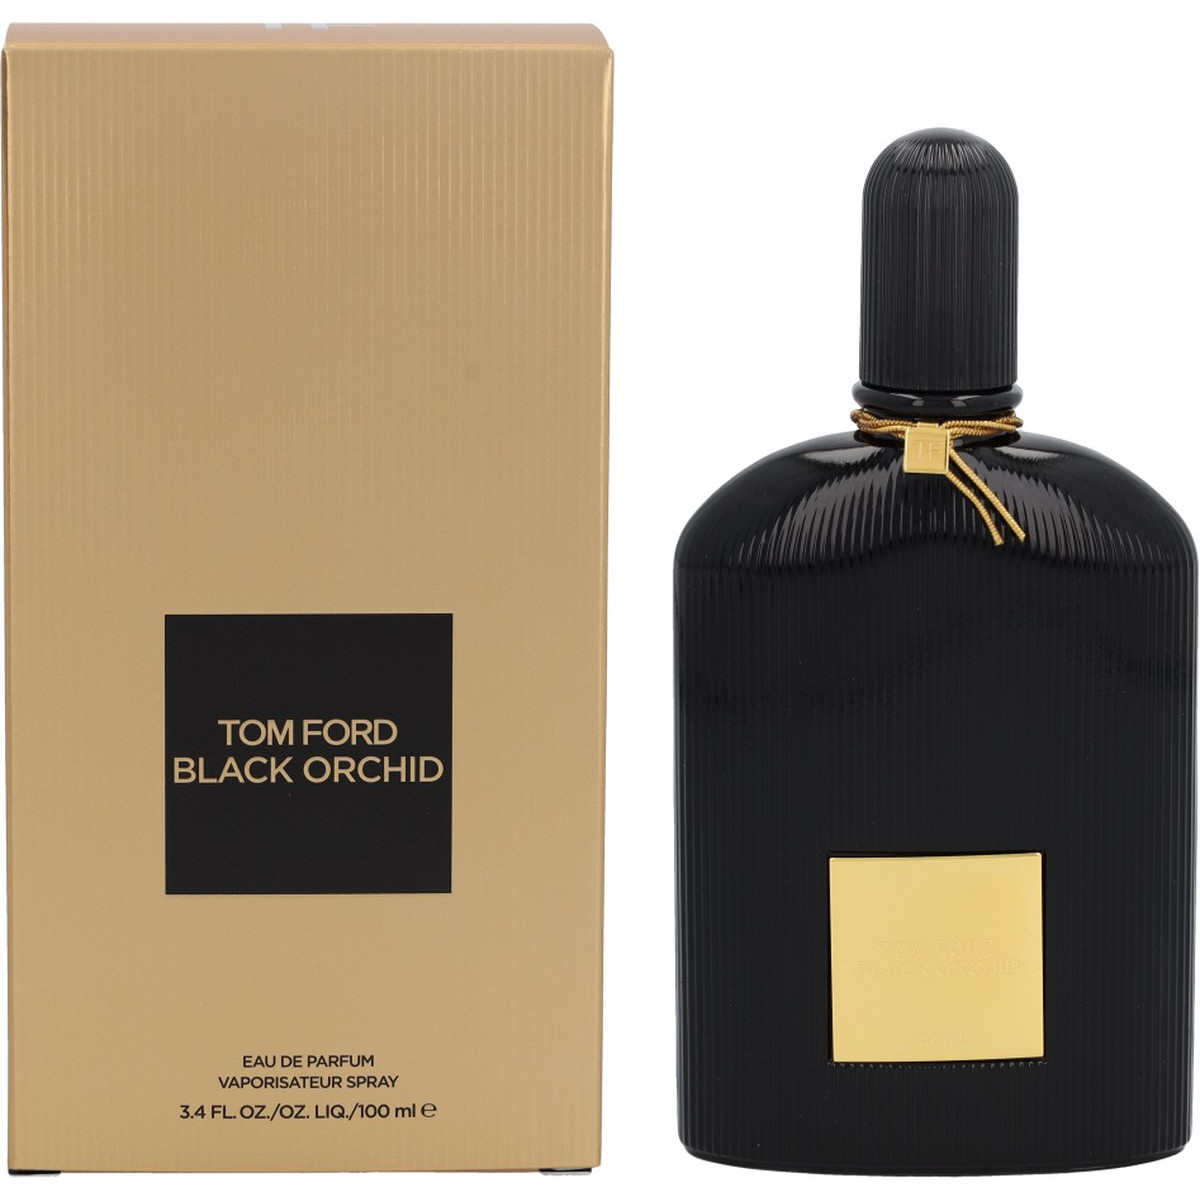 BLACK ORCHID parfum – Tom Ford